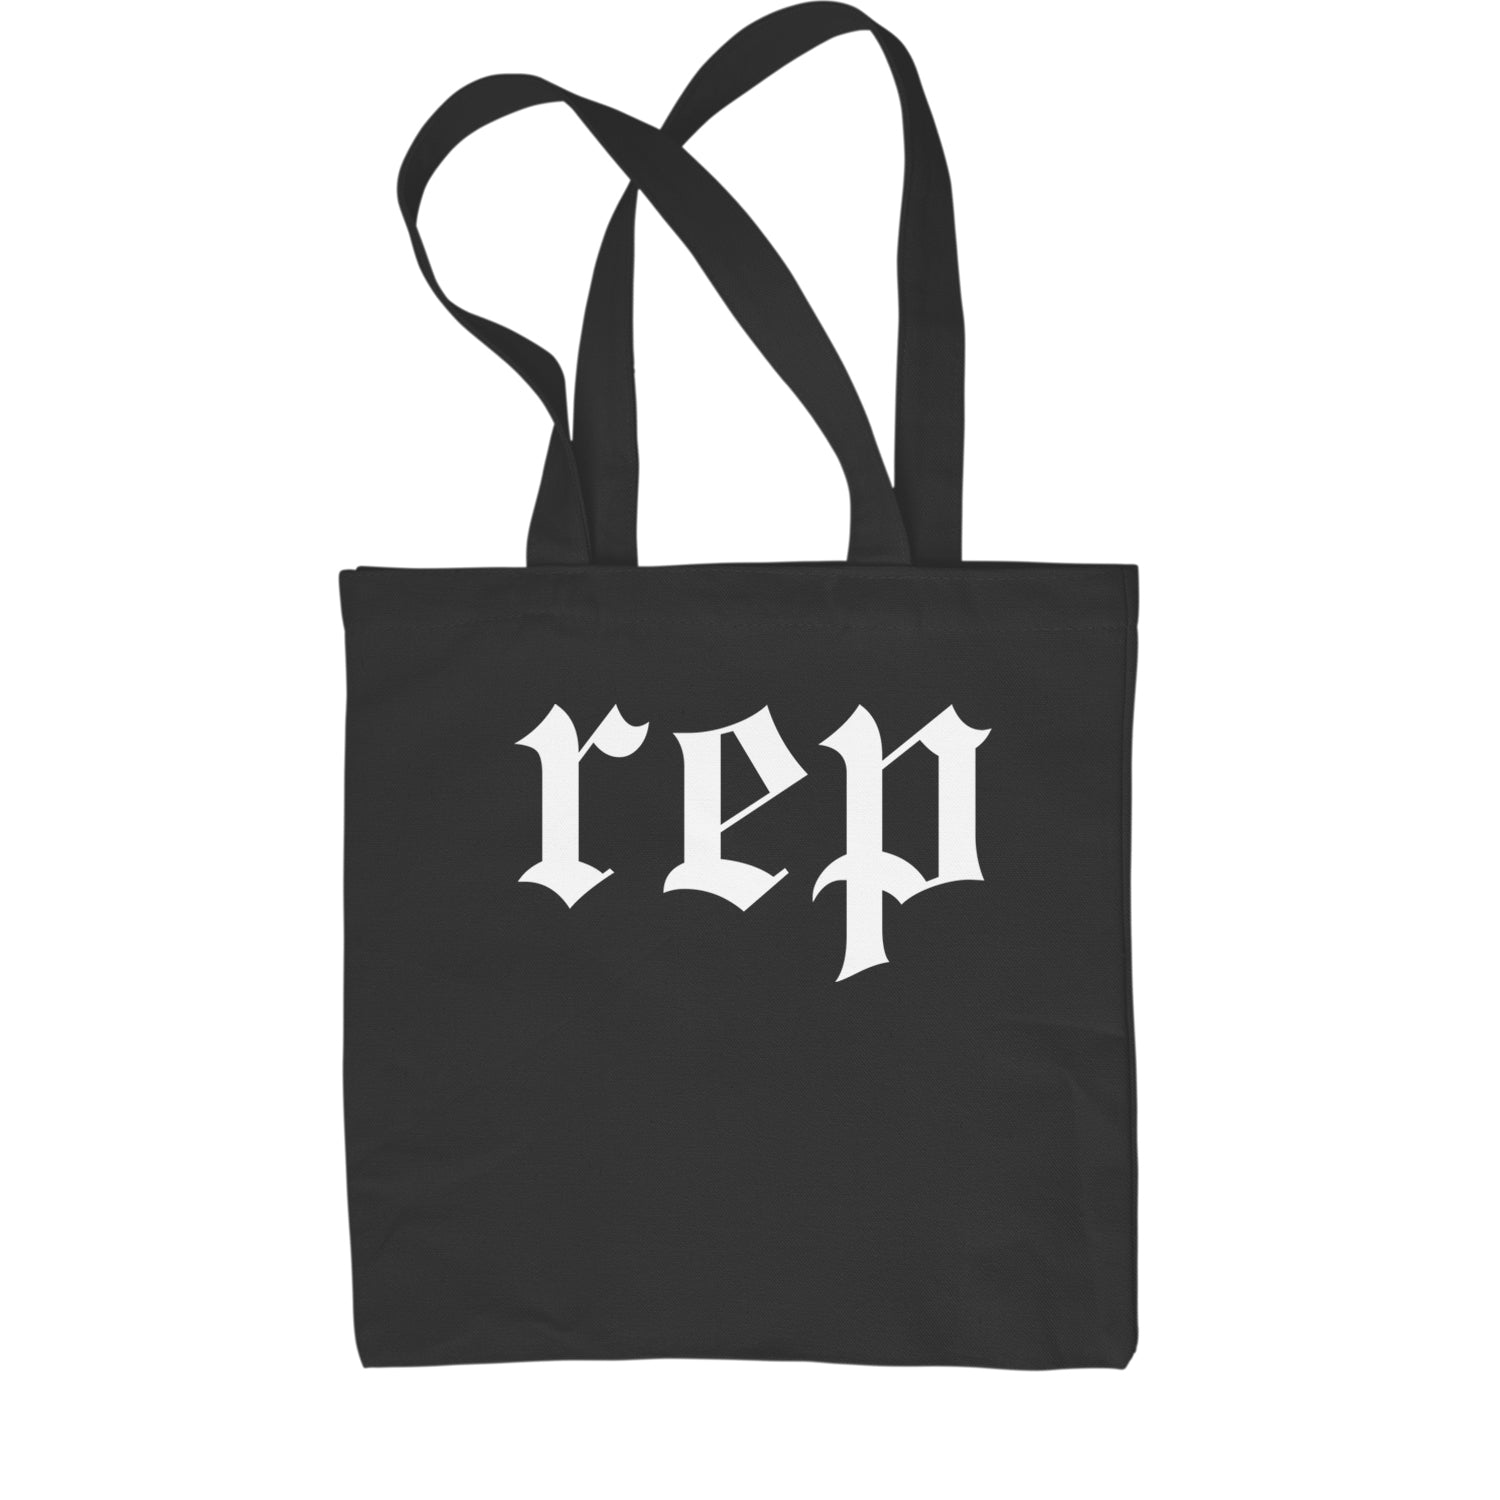 REP Reputation Music Lover Gift Fan Favorite Shopping Tote Bag